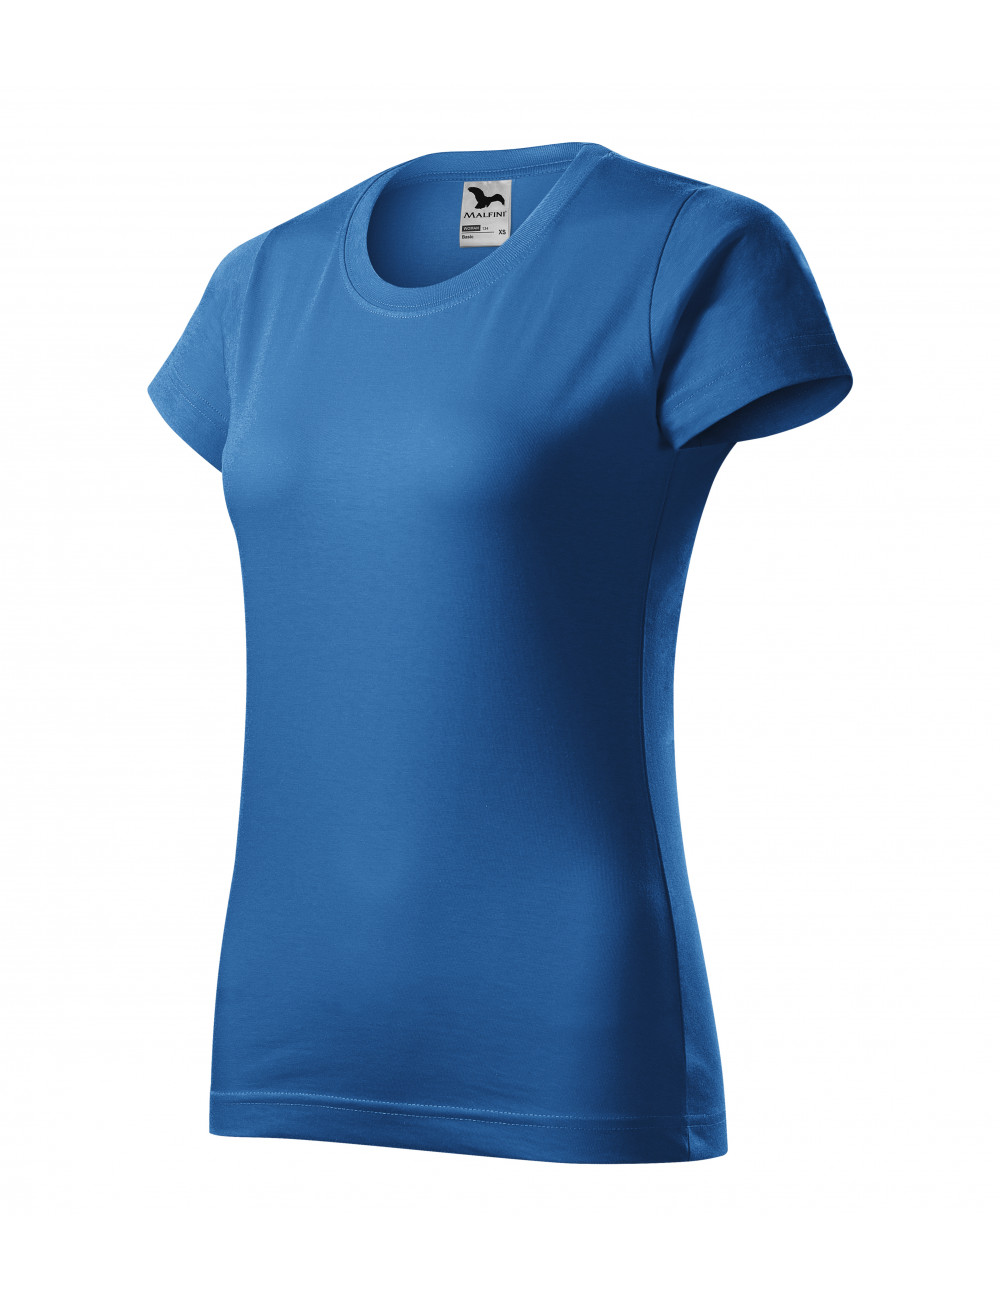 Basic Damen T-Shirt 134 azurblau Adler Malfini